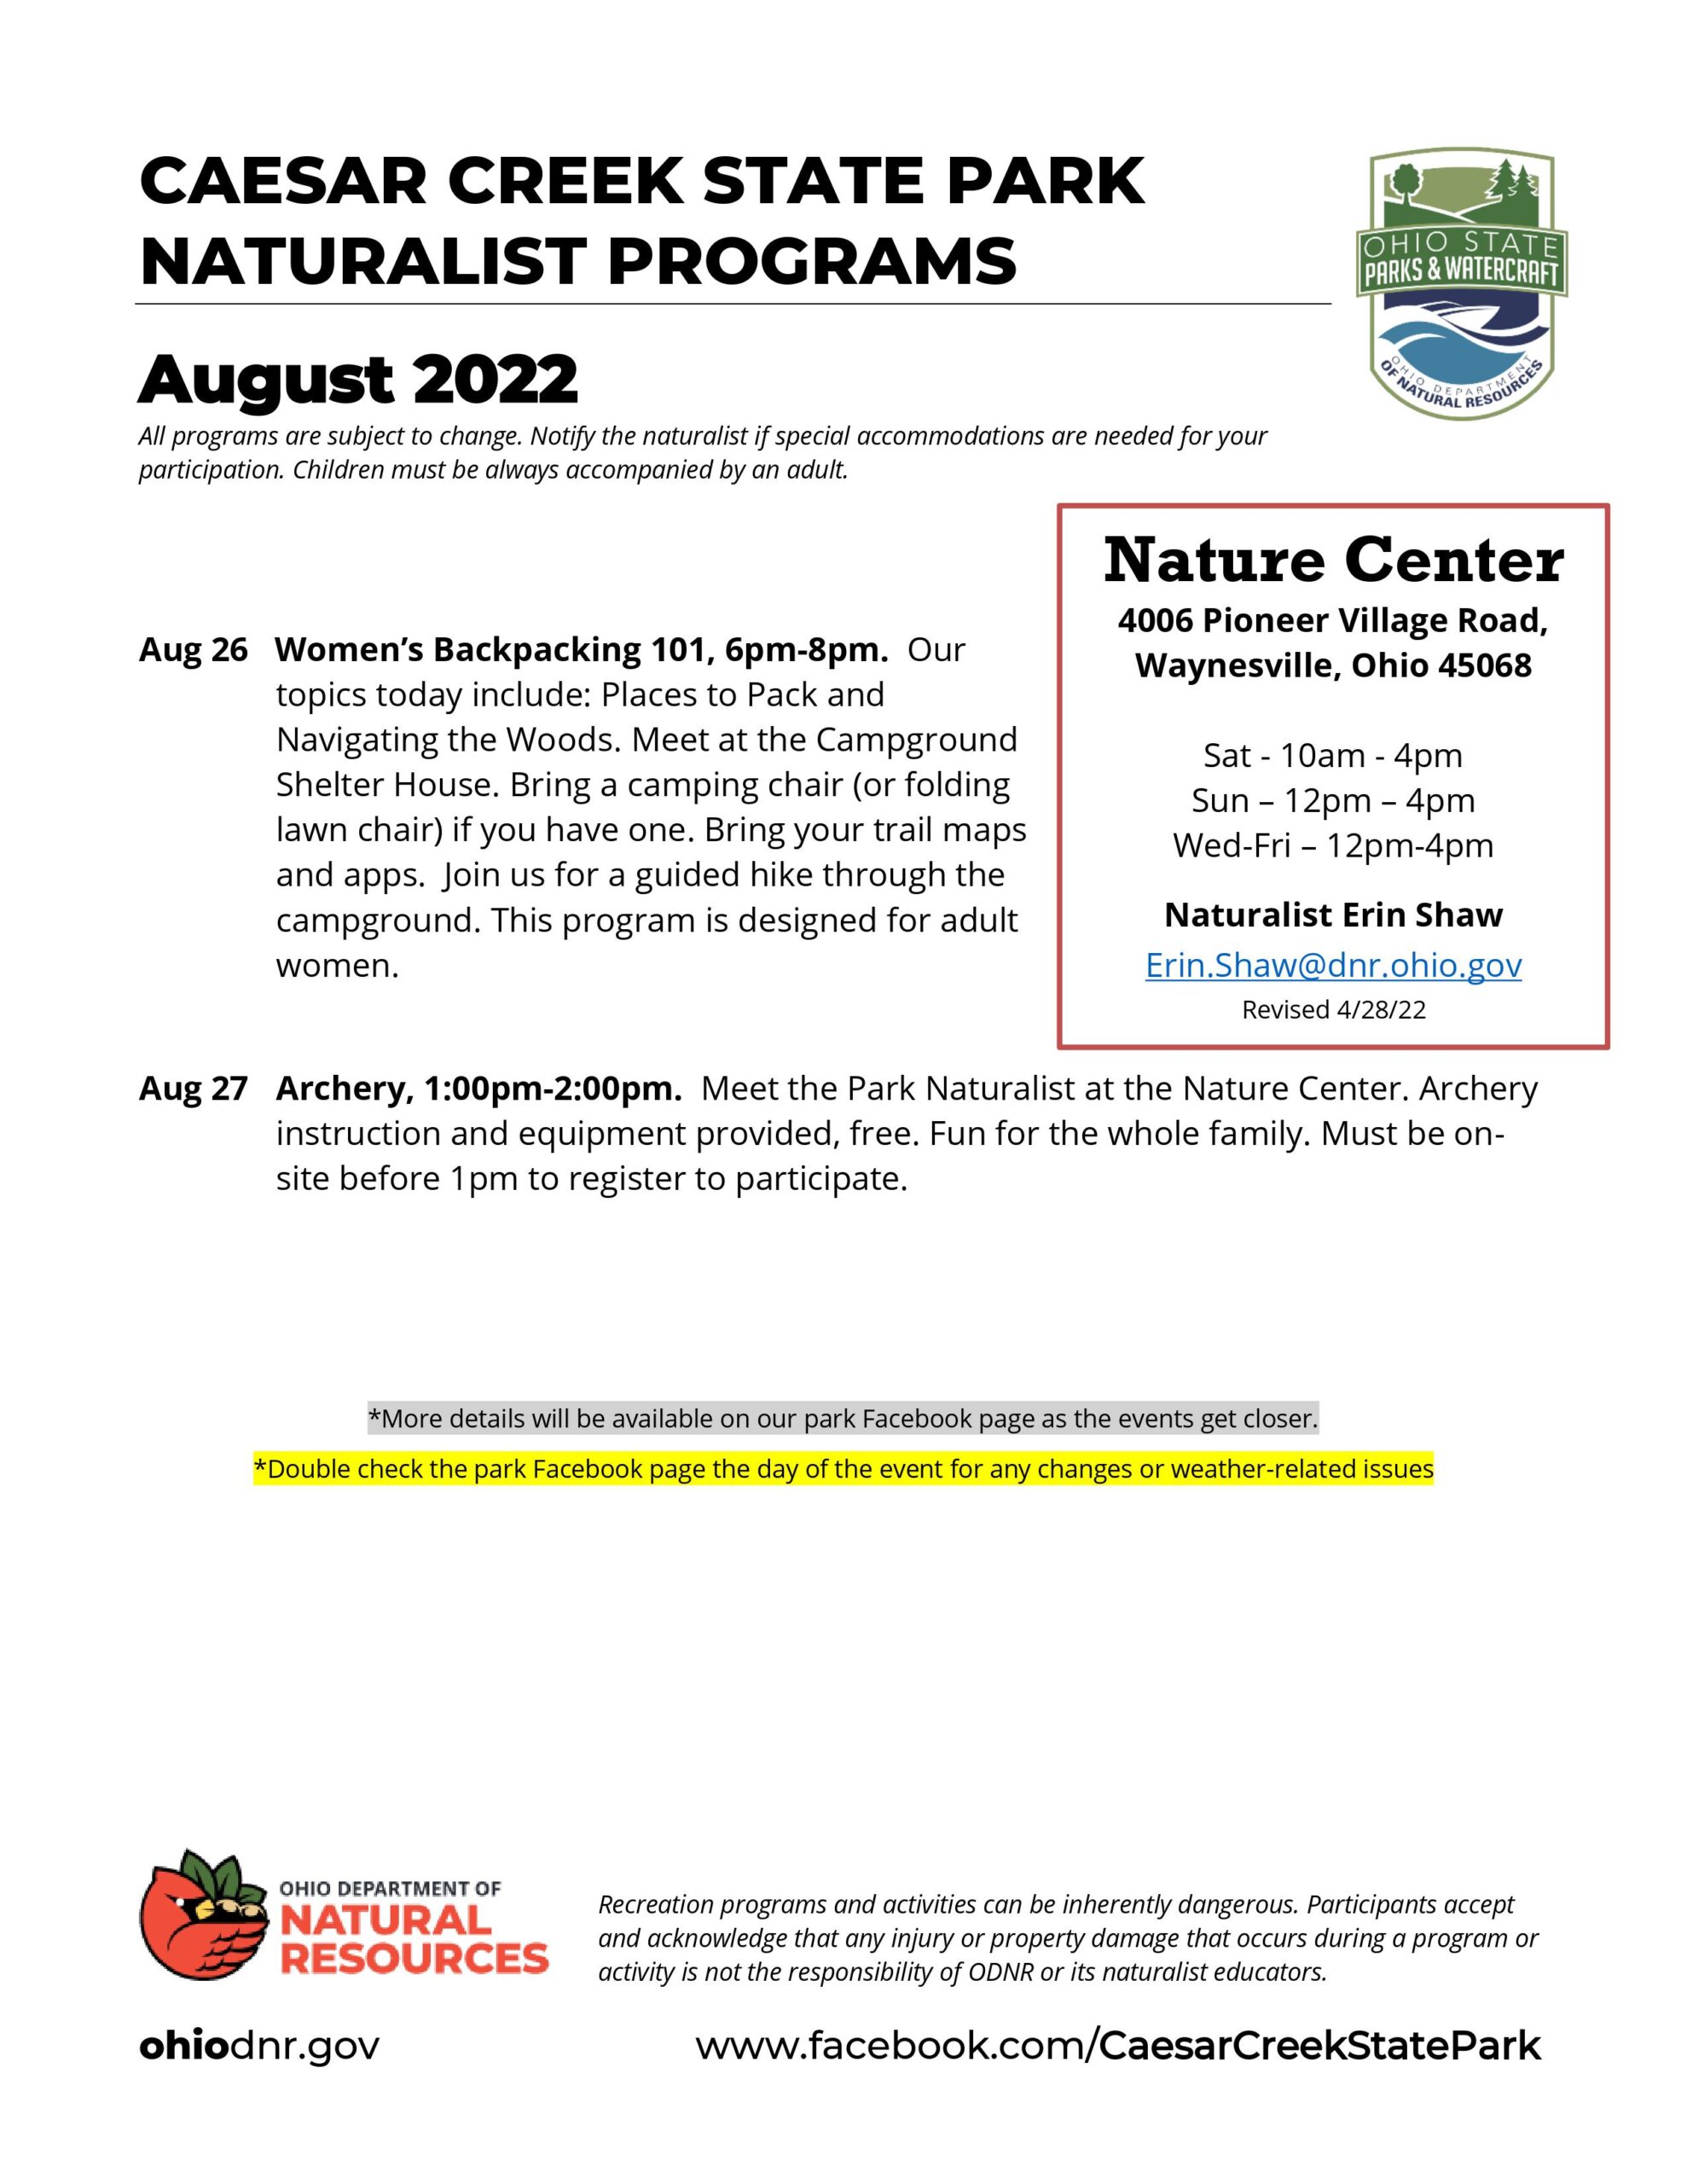 August 2022 Programs3